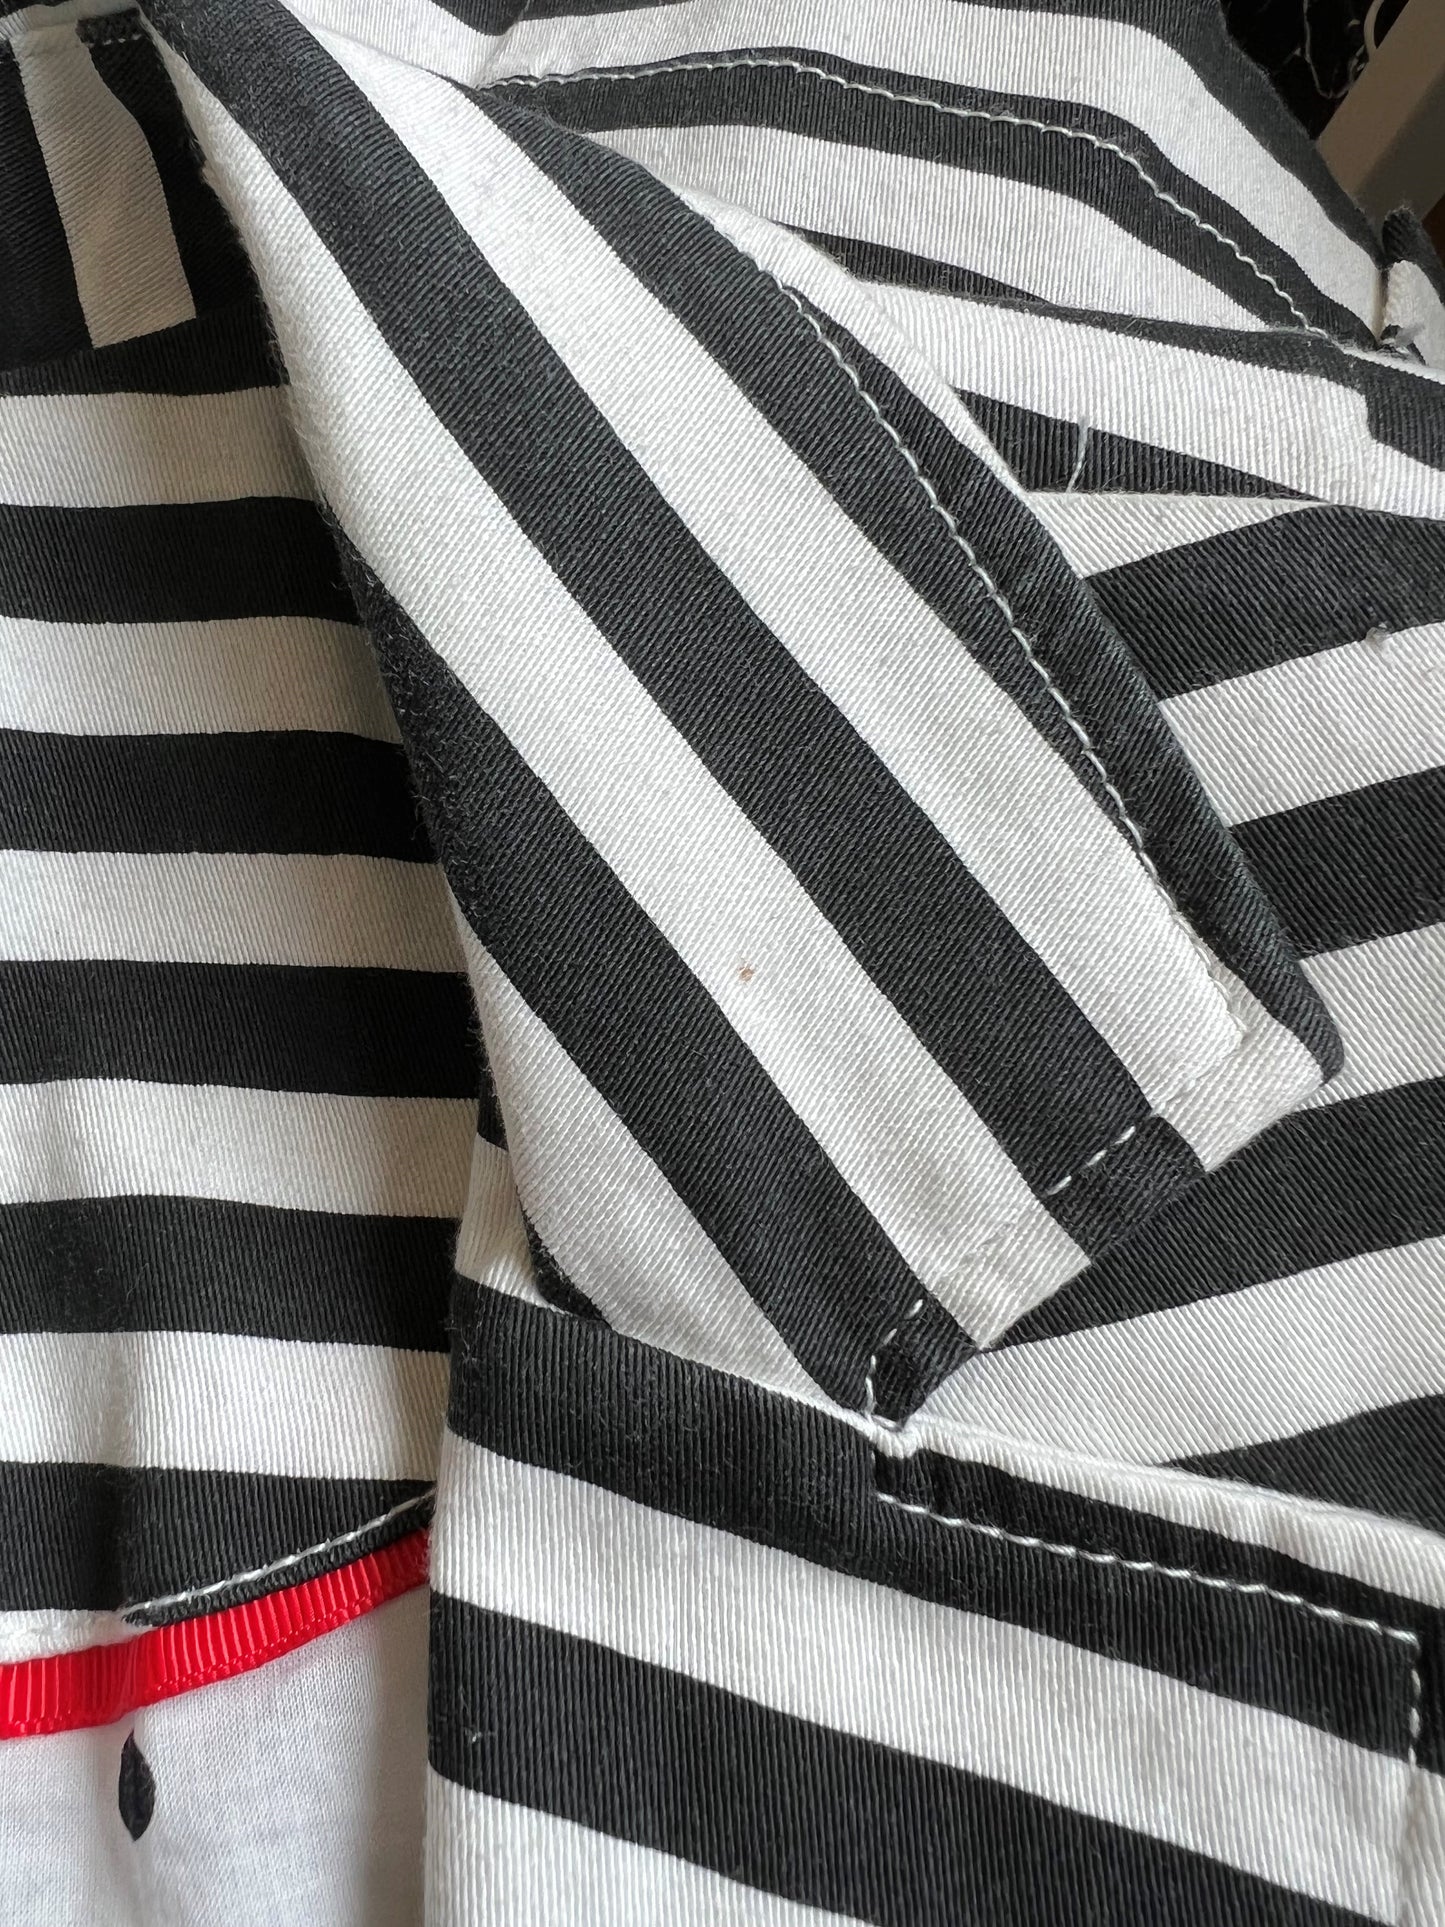 Laura Ashley black & white stripe blazer, size XS